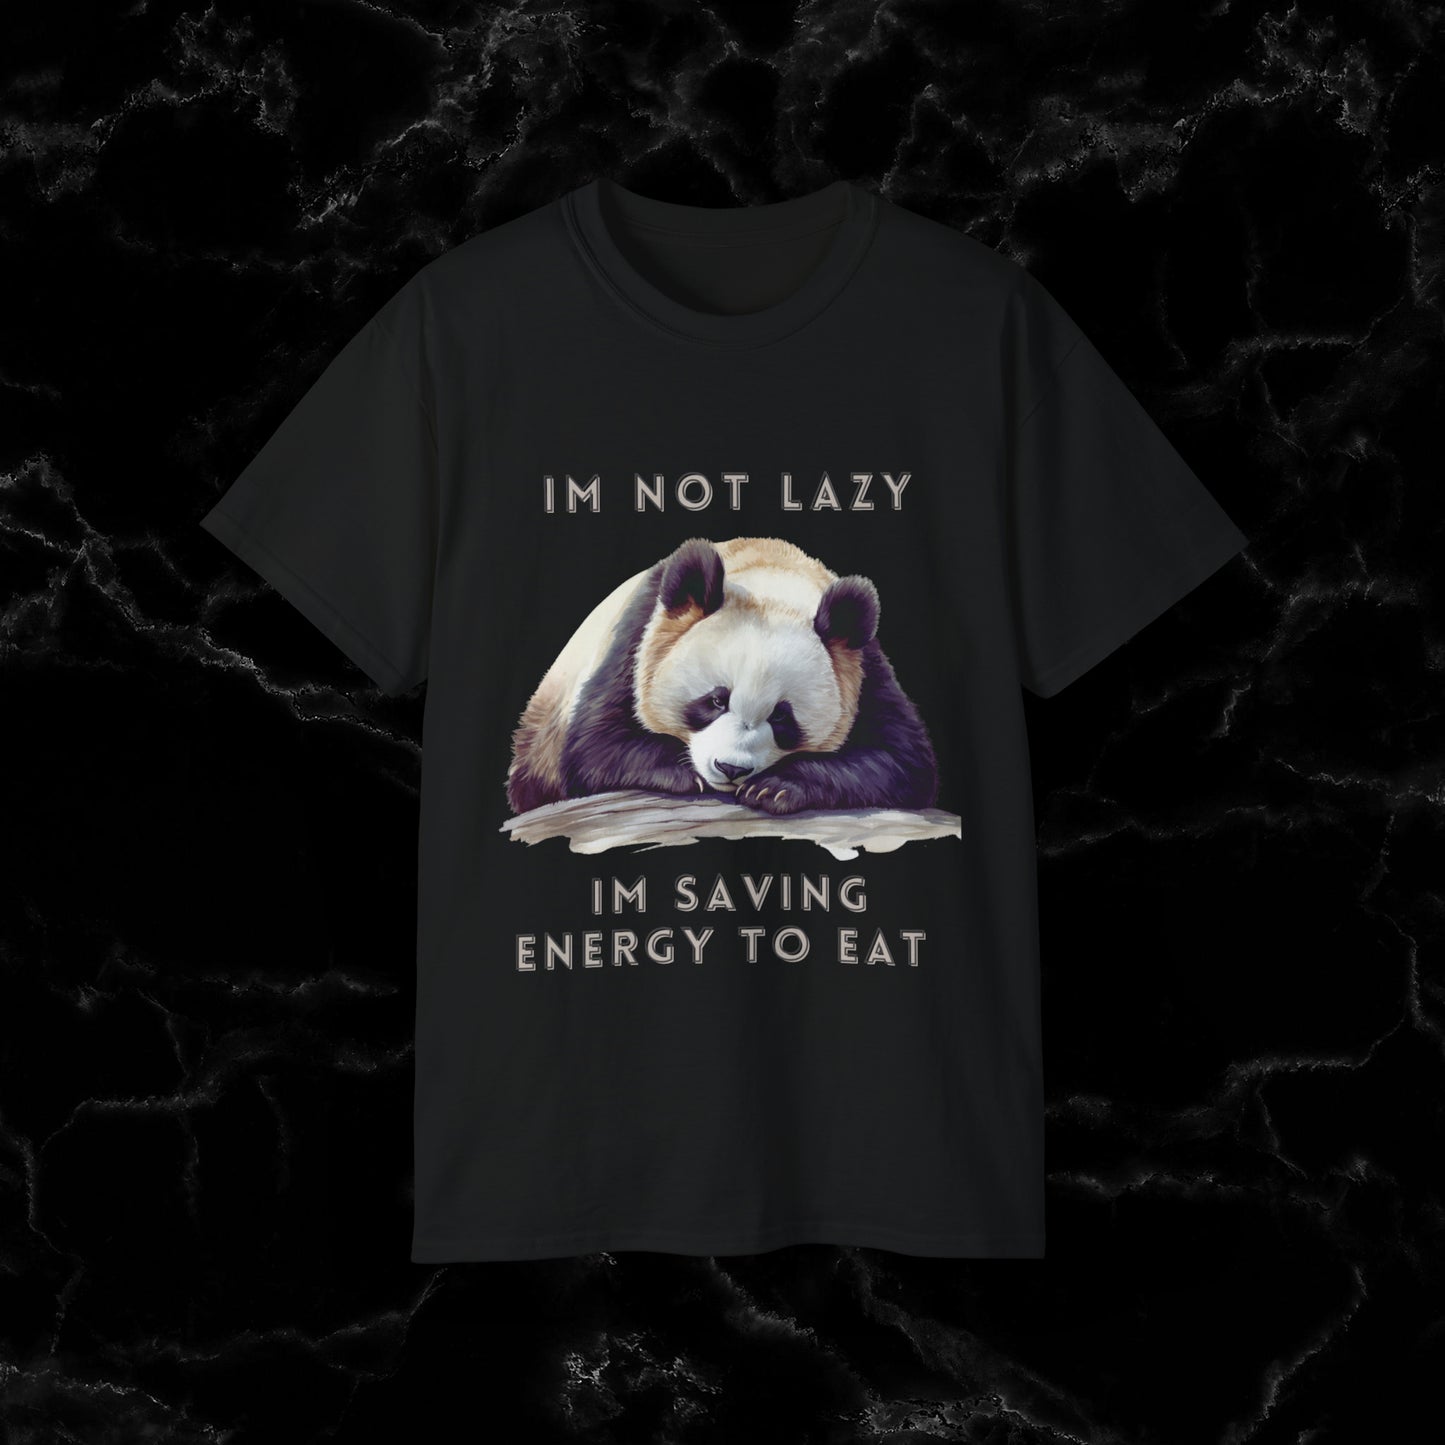 Nap Time Panda Unisex Funny Tee - Hilarious Panda Nap Design - I'm Not Lazy, I'm Saving Energy to Eat T-Shirt Black S 